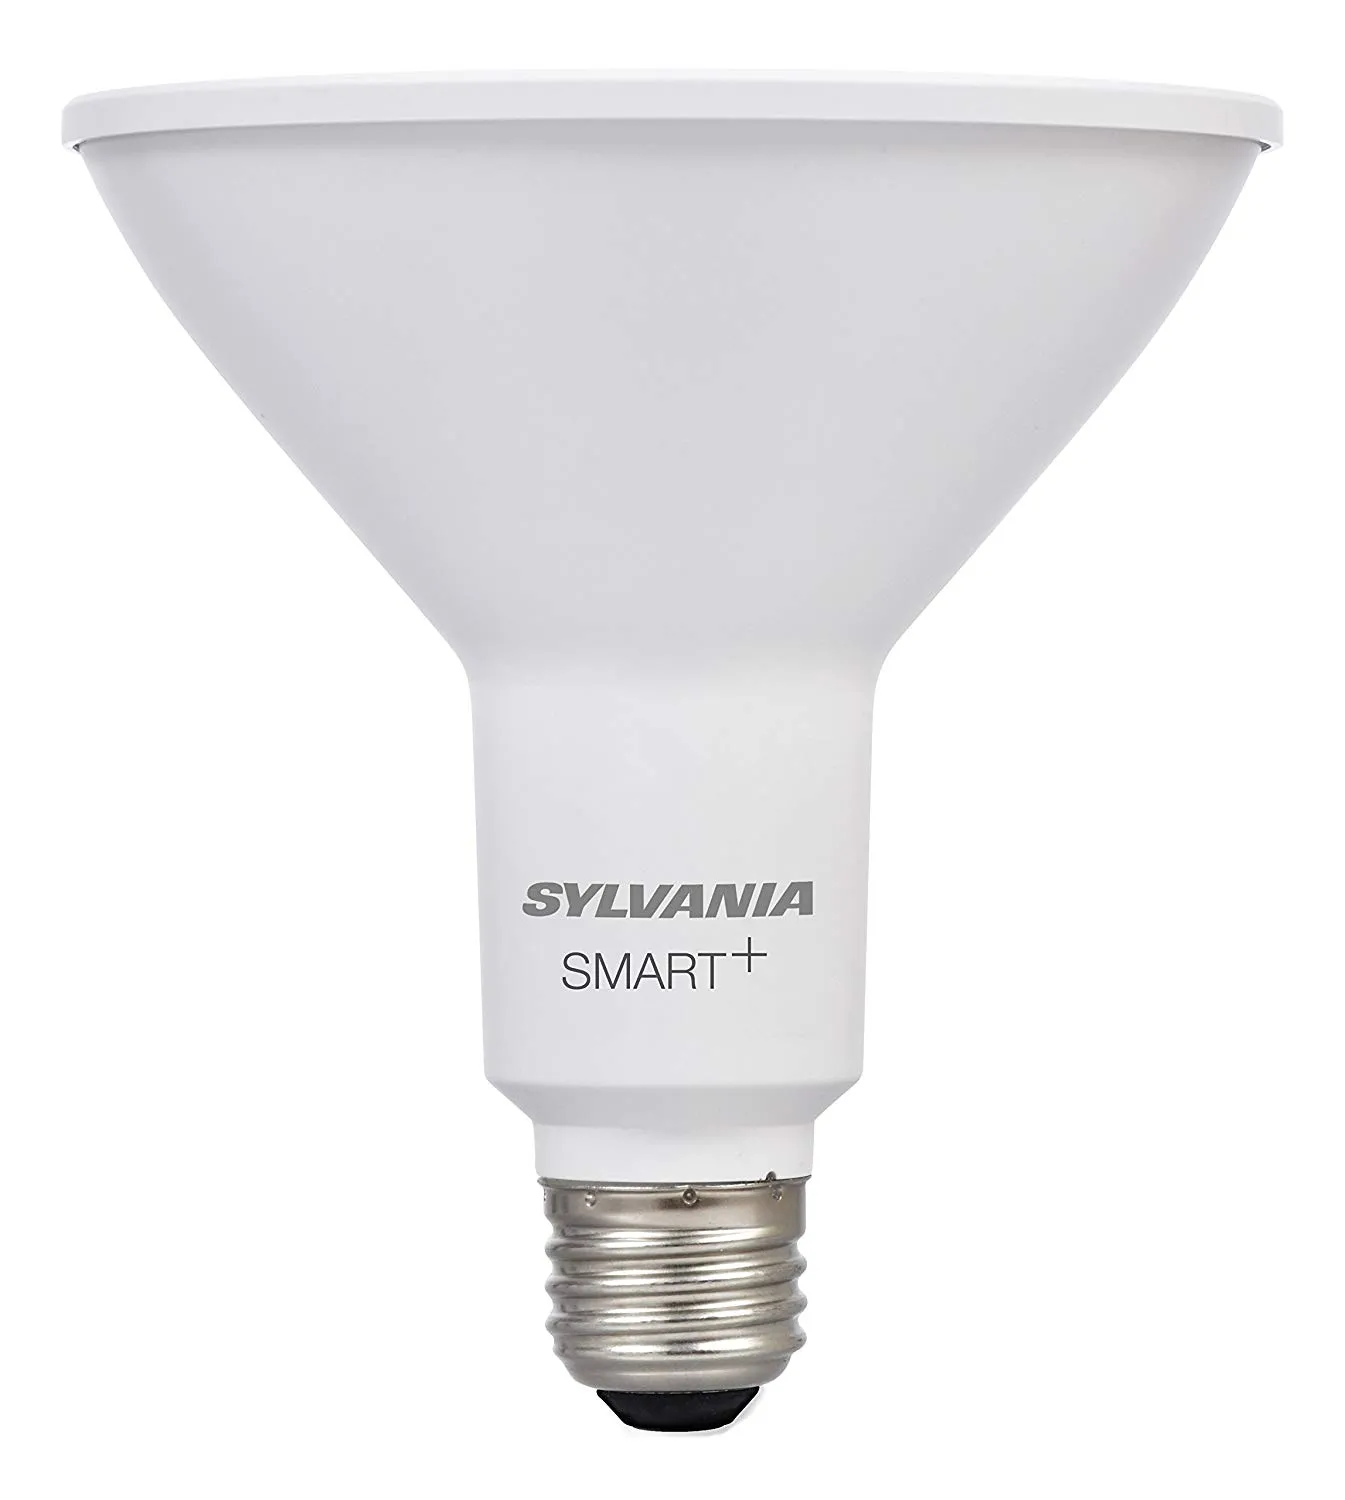 Smart+ Soft White PAR38 Outdoor Flood Light Bulb